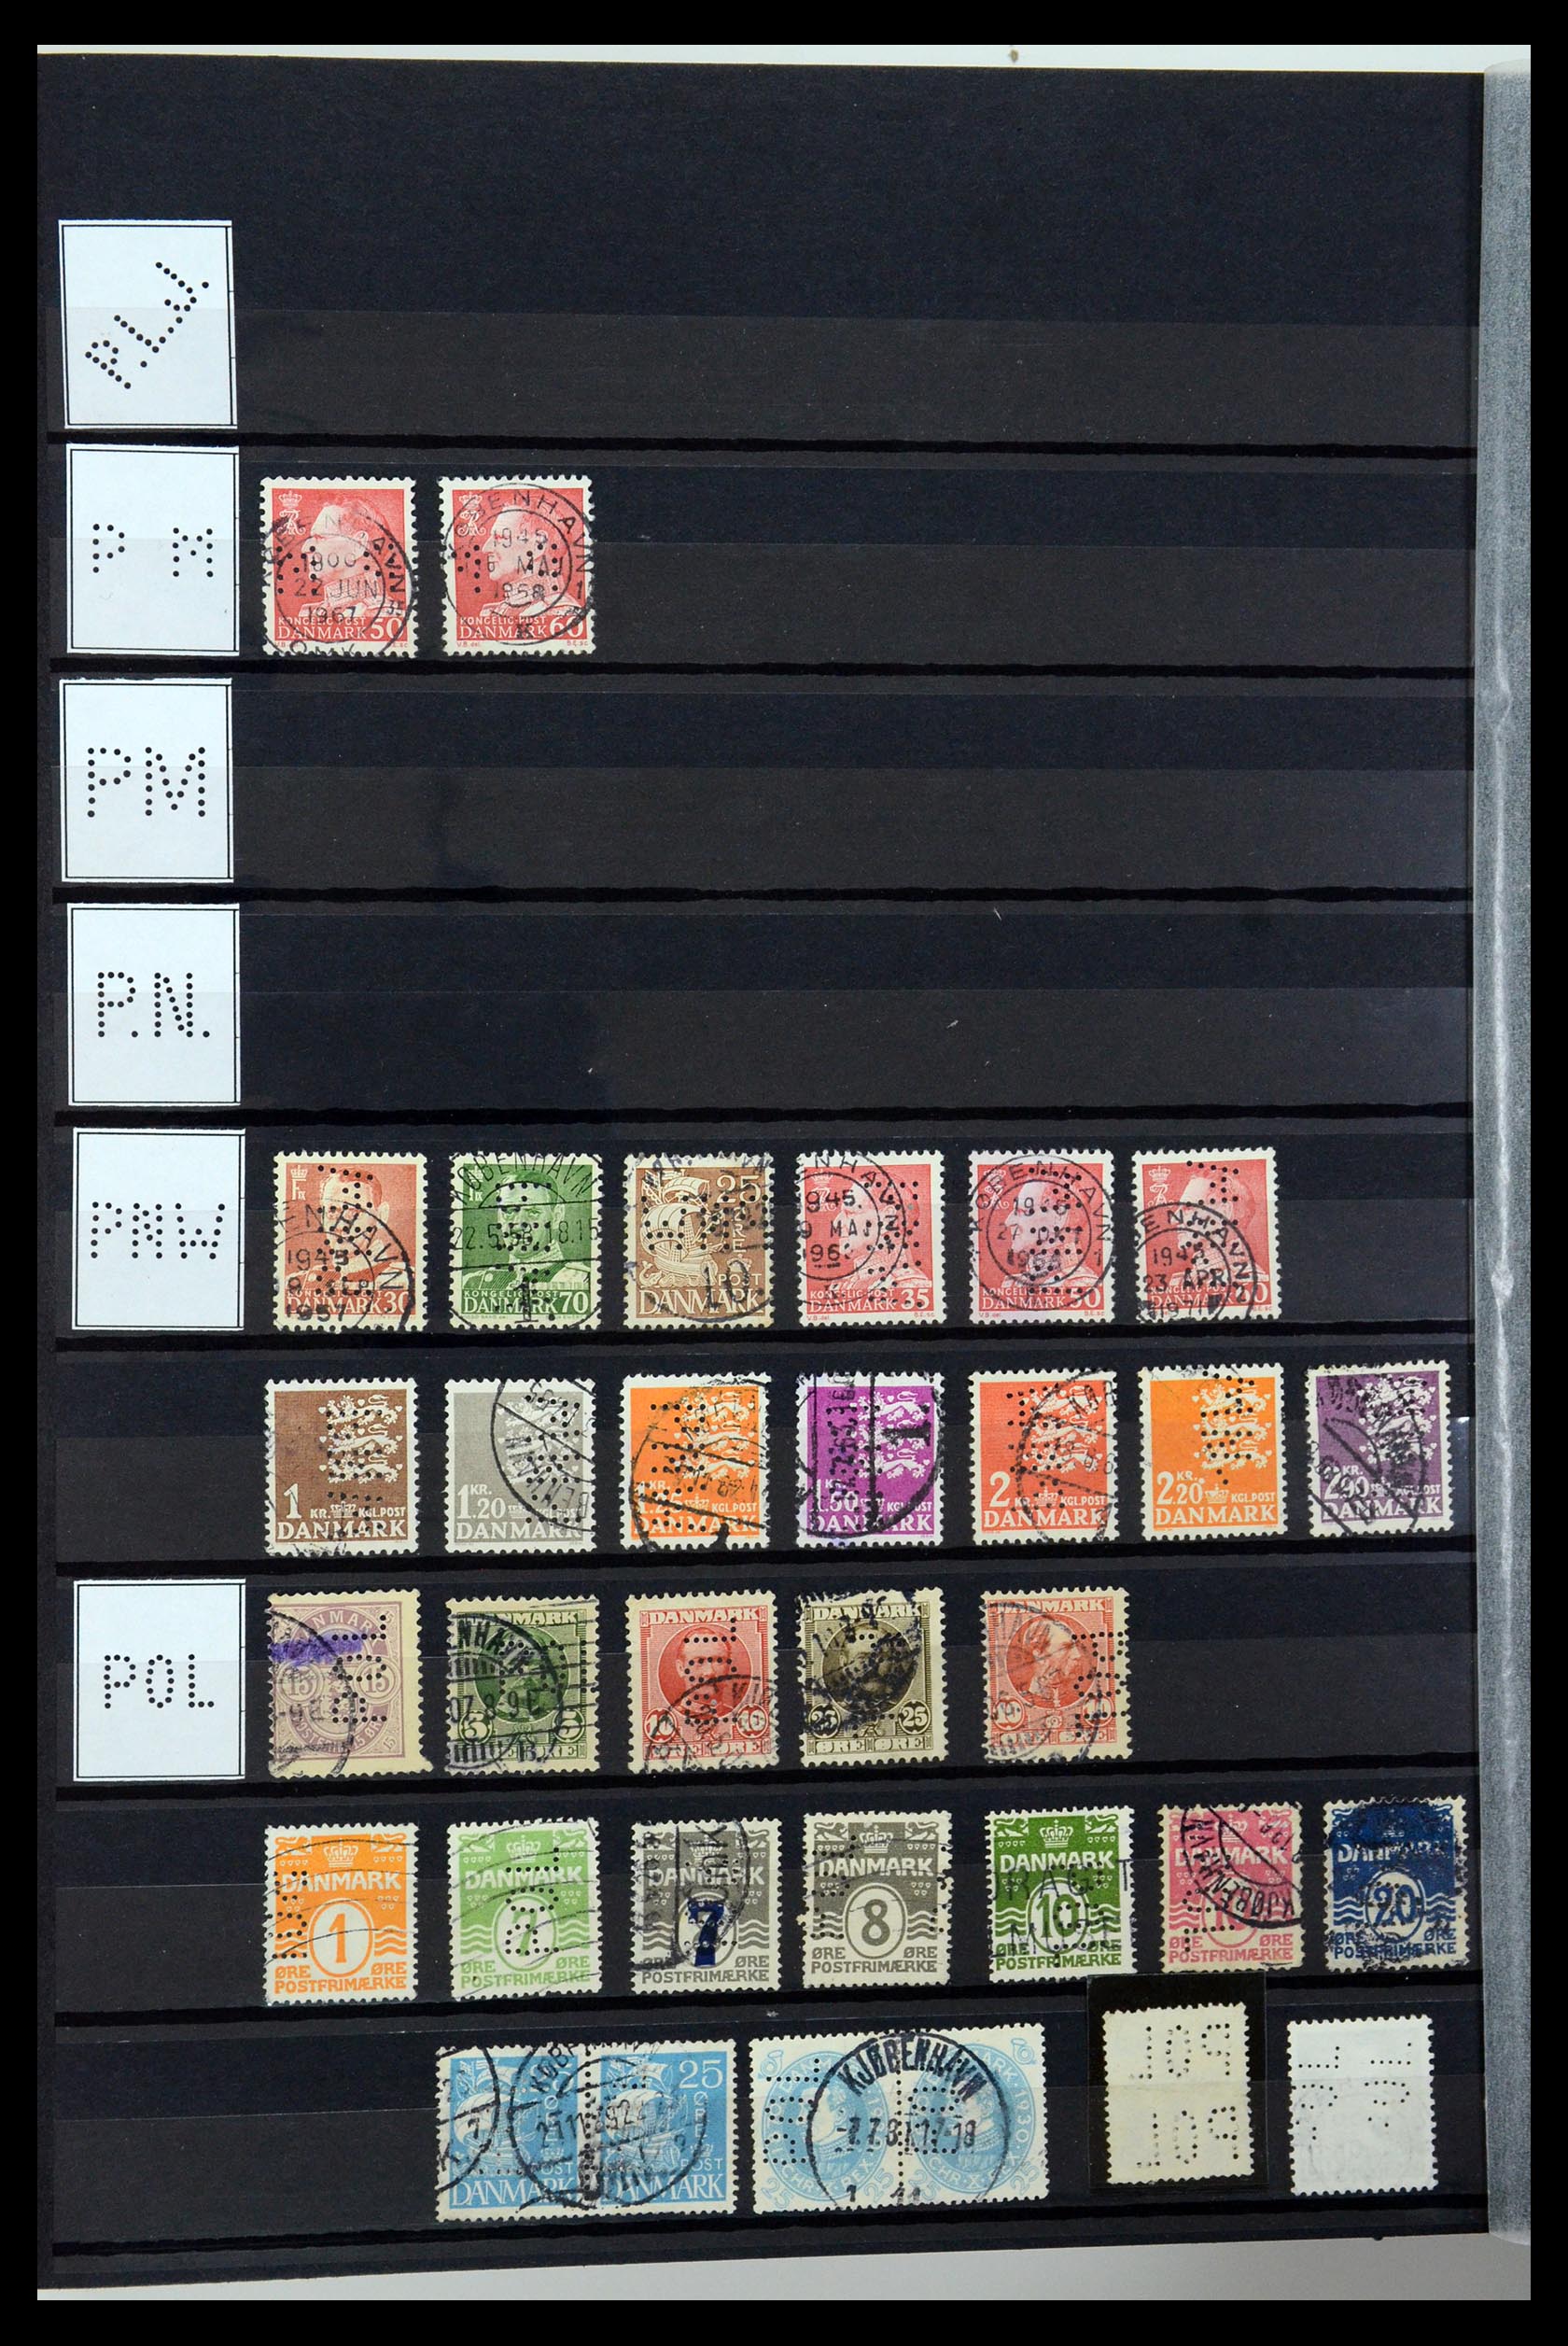 36396 195 - Stamp collection 36396 Denmark perfins.